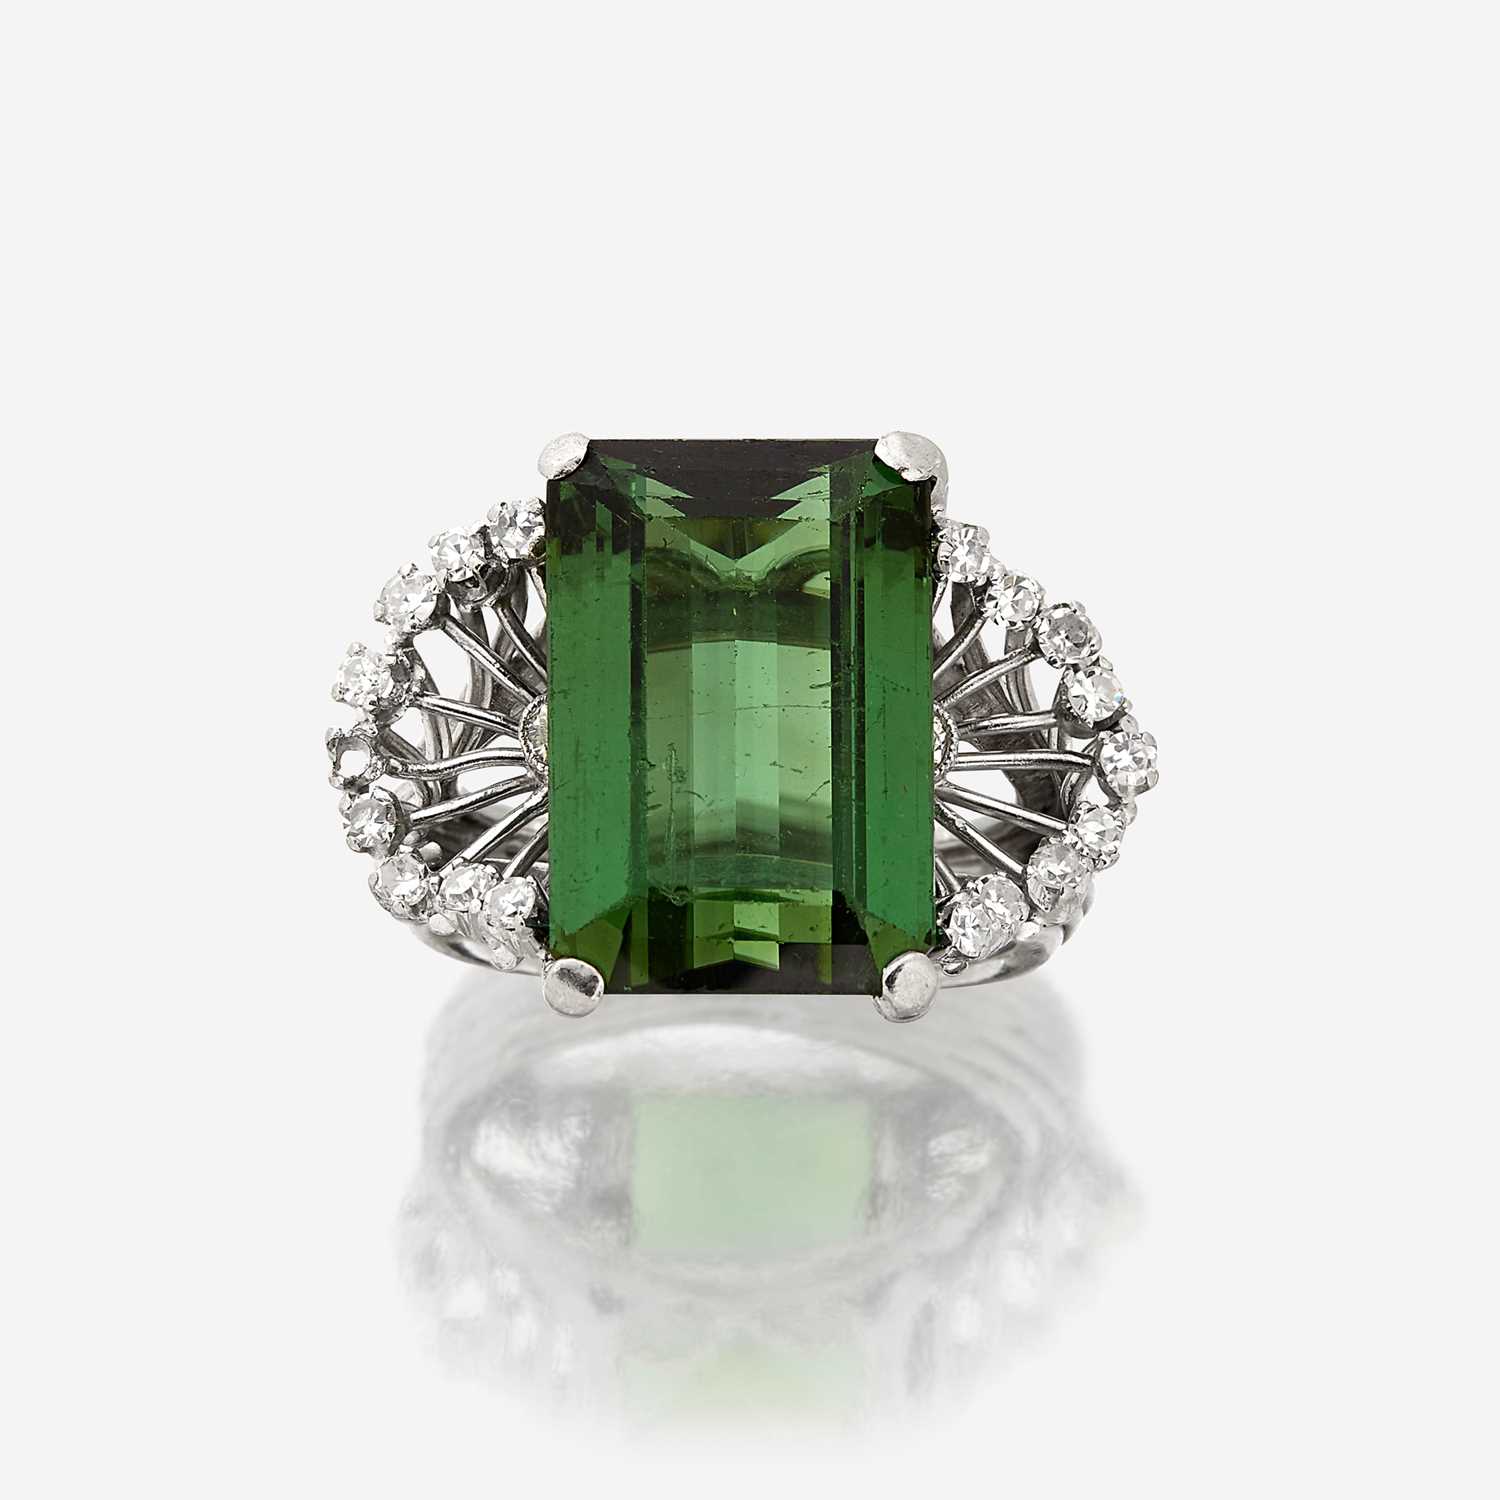 Lot 134 - A green tourmaline, diamond, and platinum ring